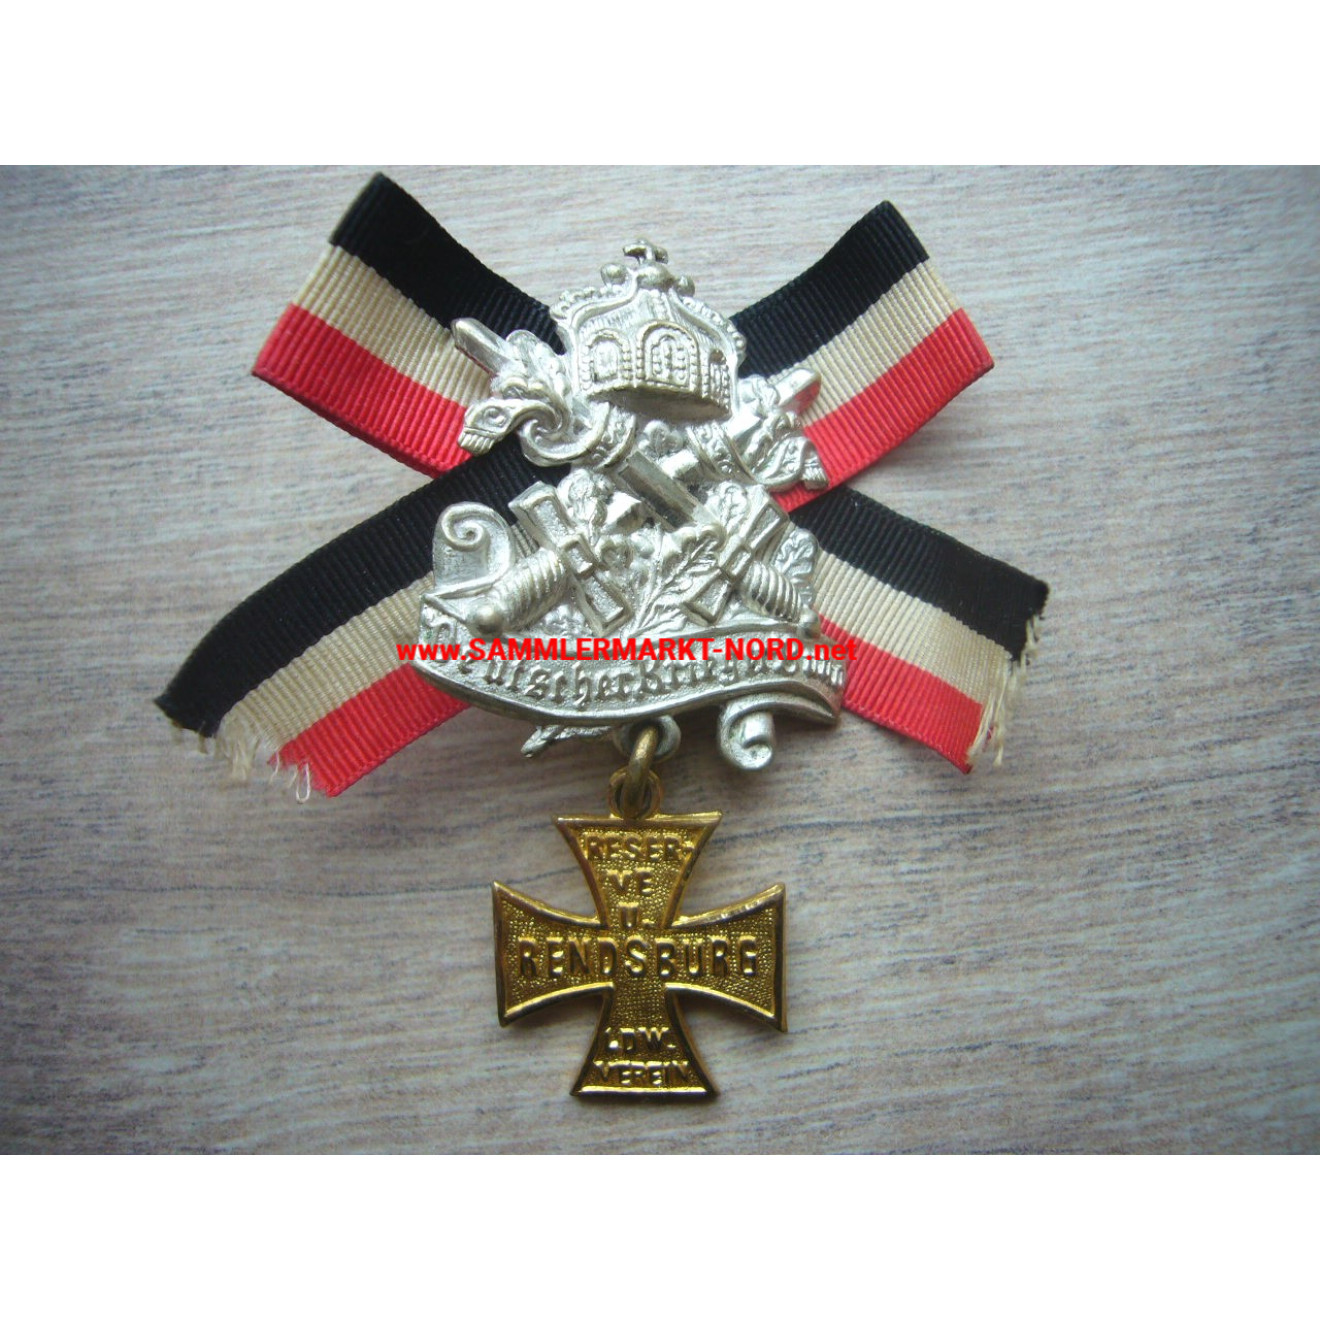 Reserve and Landwehr Association Rendsburg - Cross of Honor